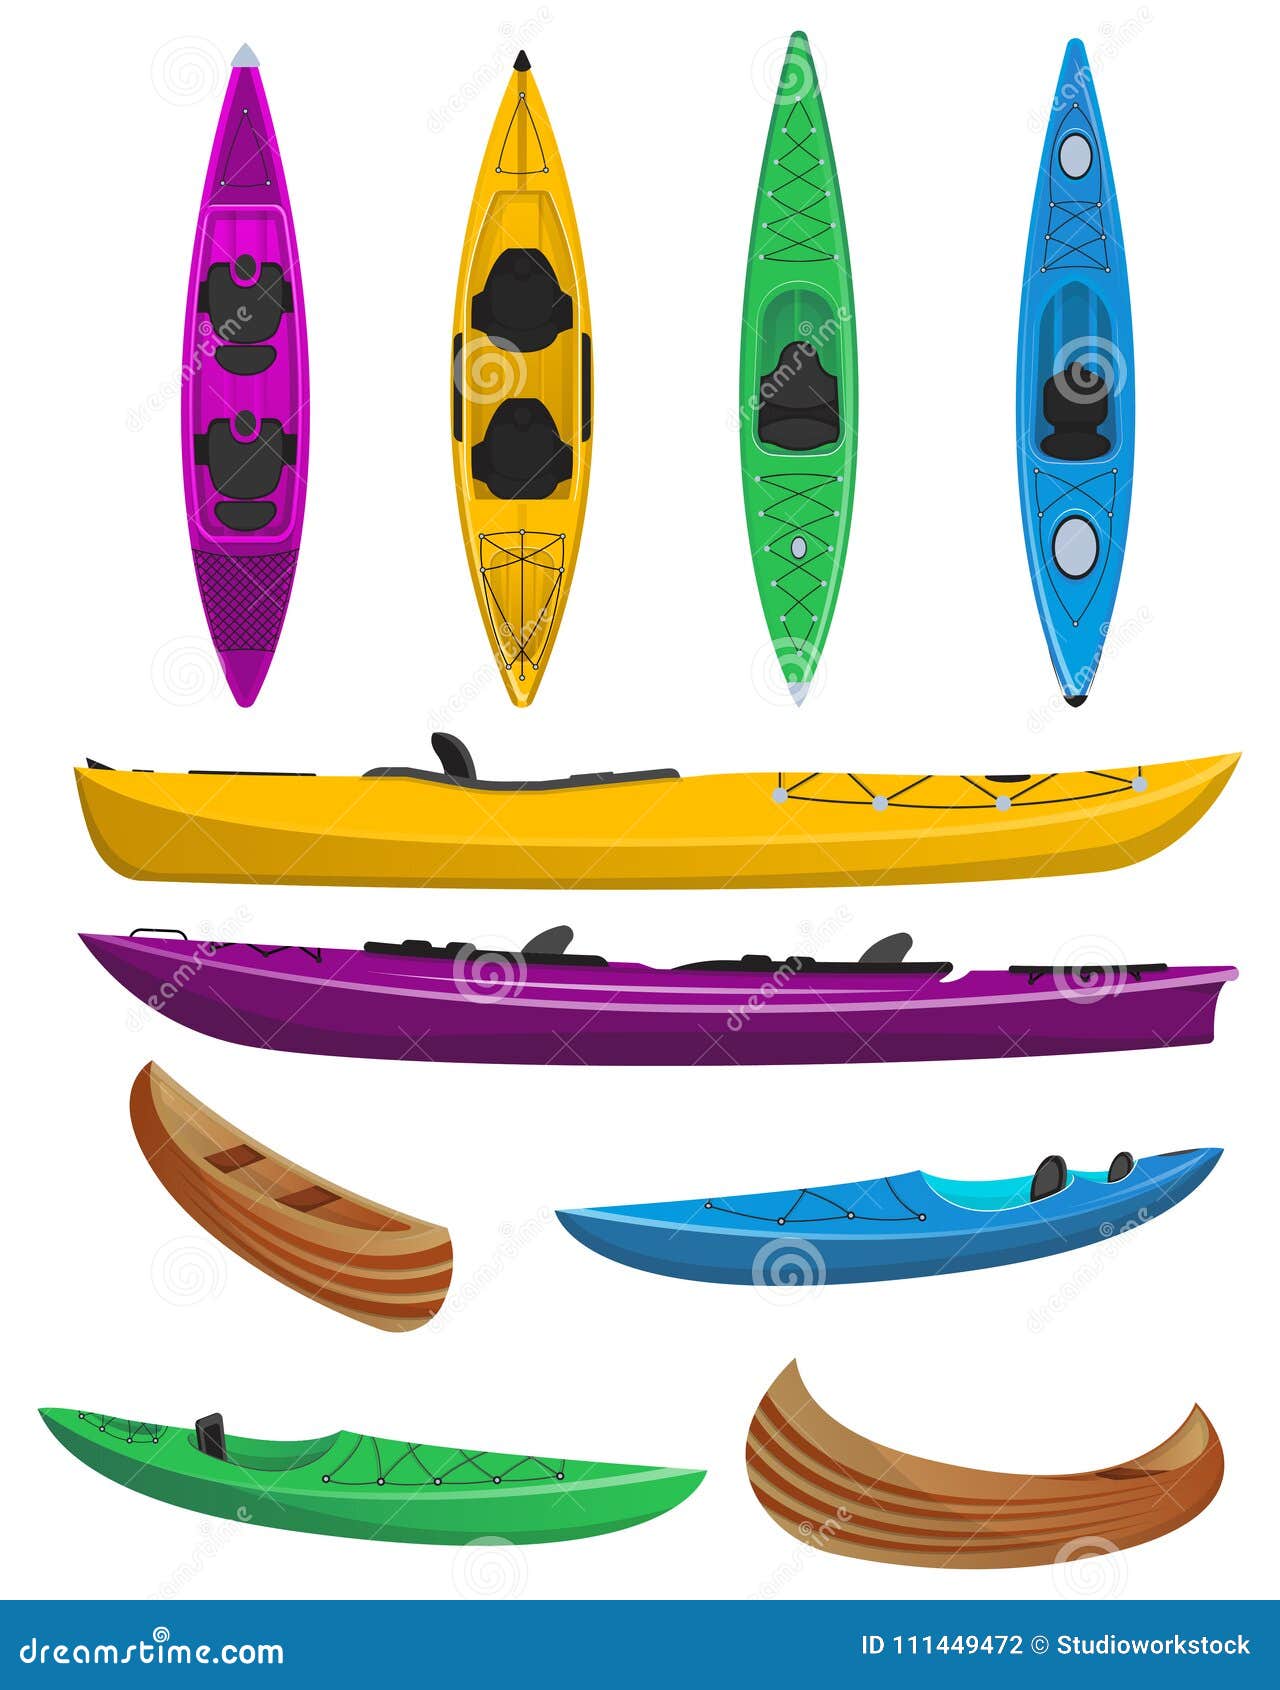 Plastic colorful kayaks isolated set